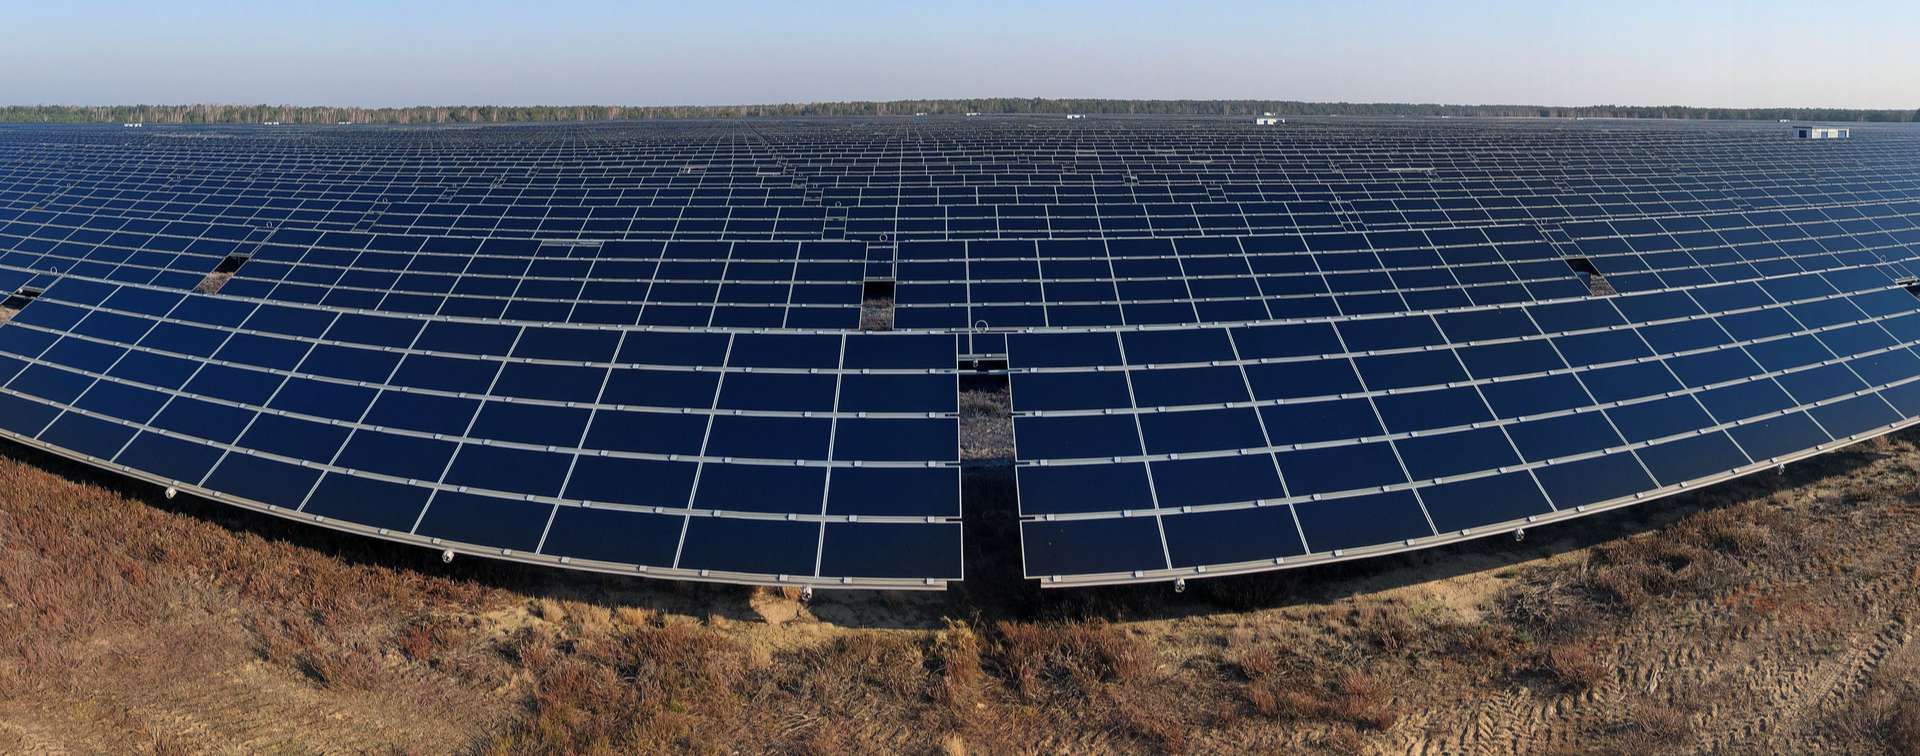 Photovoltaikanlage auf Ackerland, Freifläche